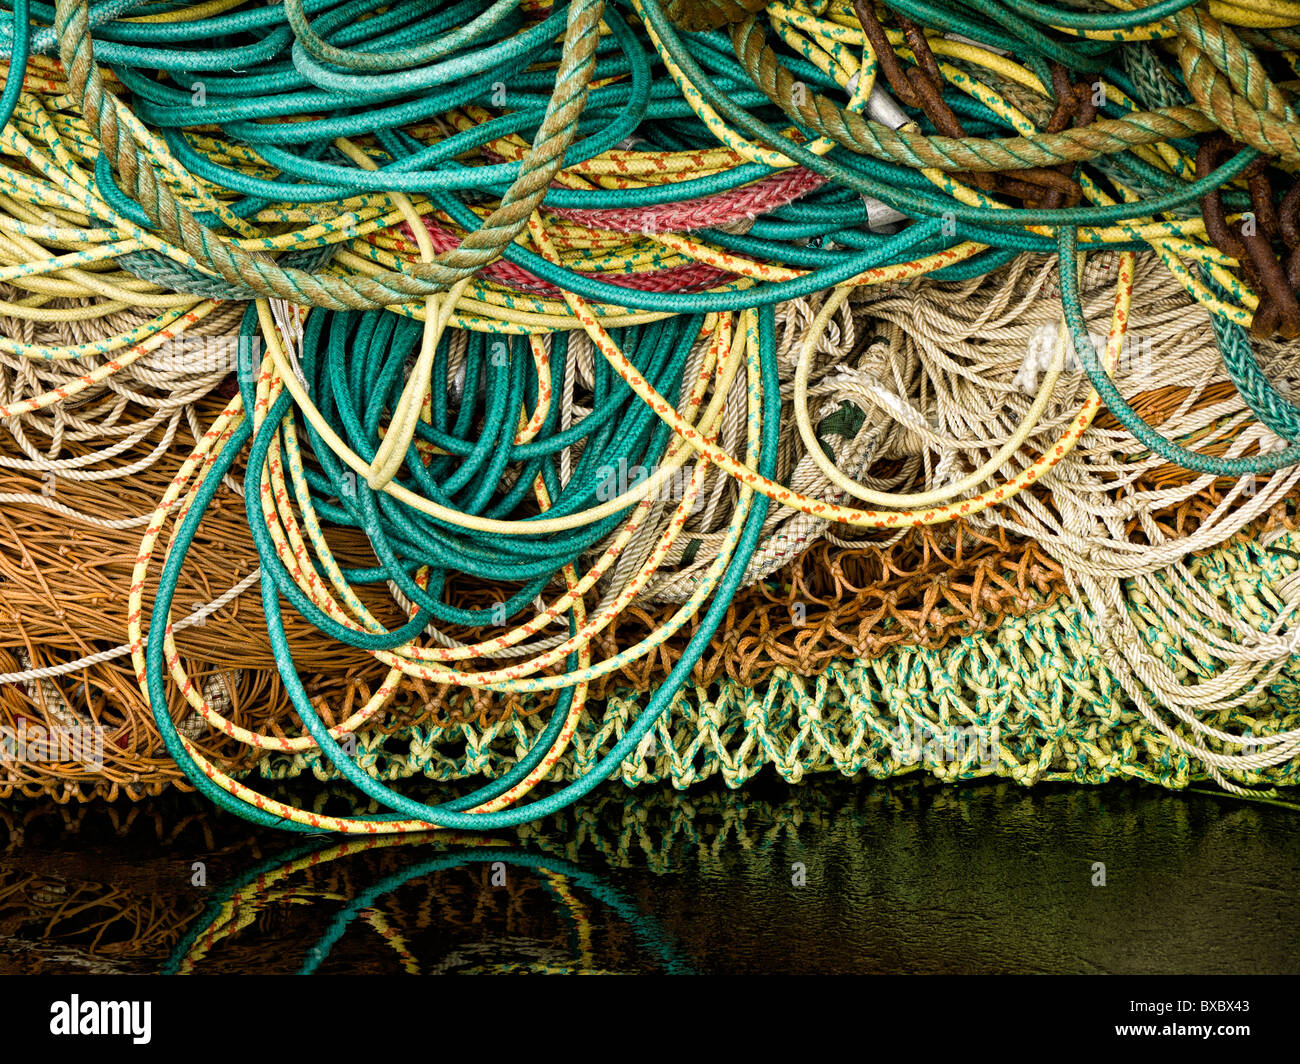 Piles of fishing nets in Newport, Oregon Stock Photo